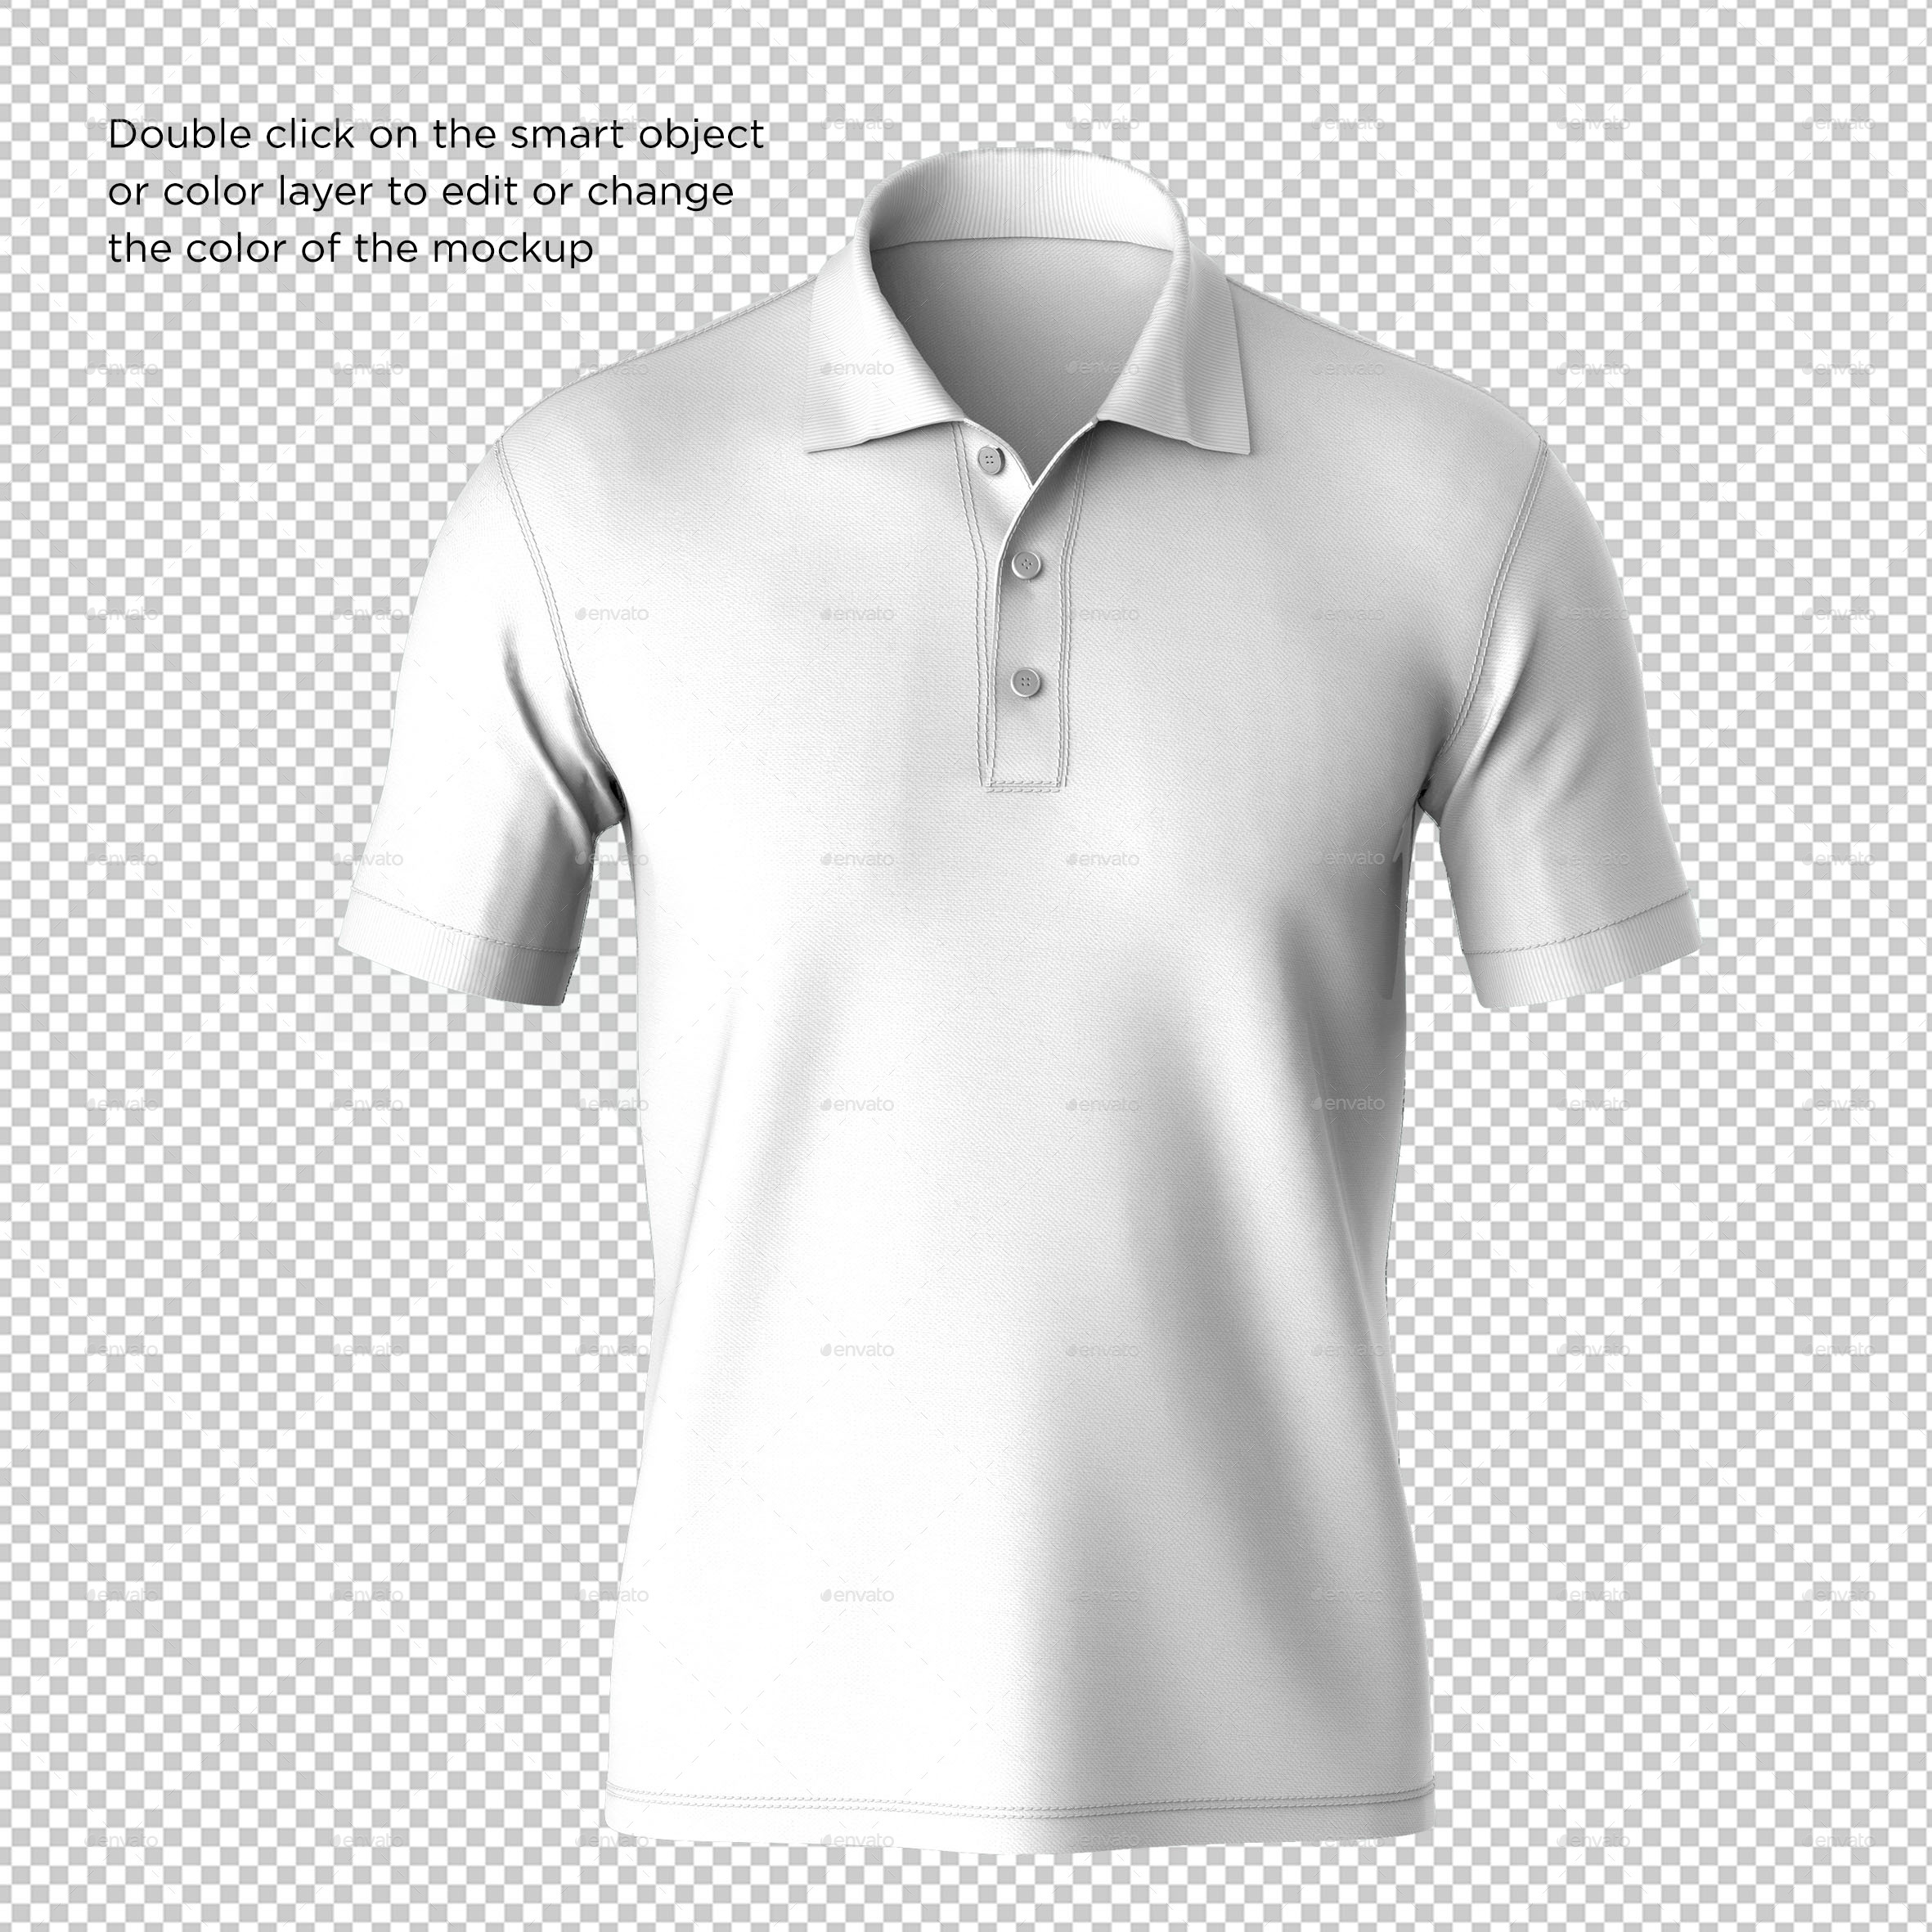 Polo Shirt Mockup by nanggroe-scripting | GraphicRiver